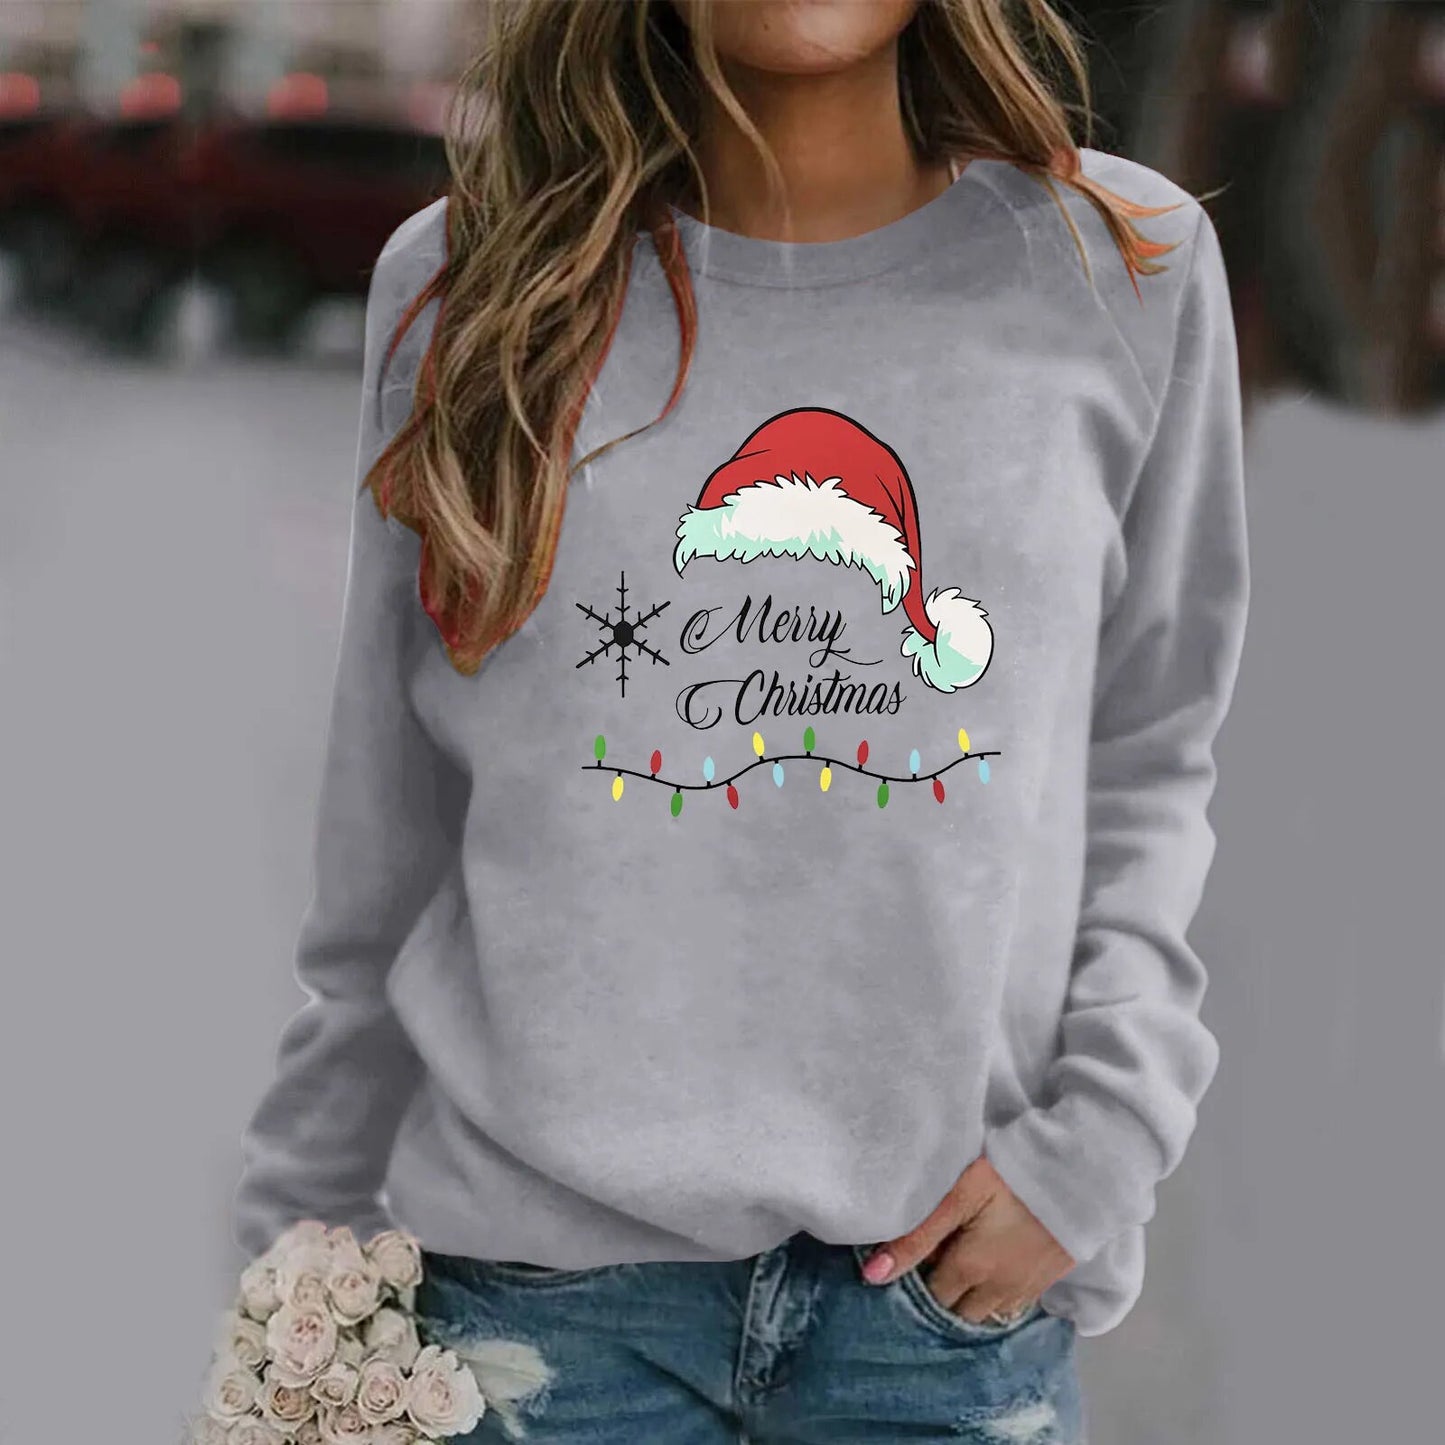 Merry Christmas Printed Pullover Sweatshirt